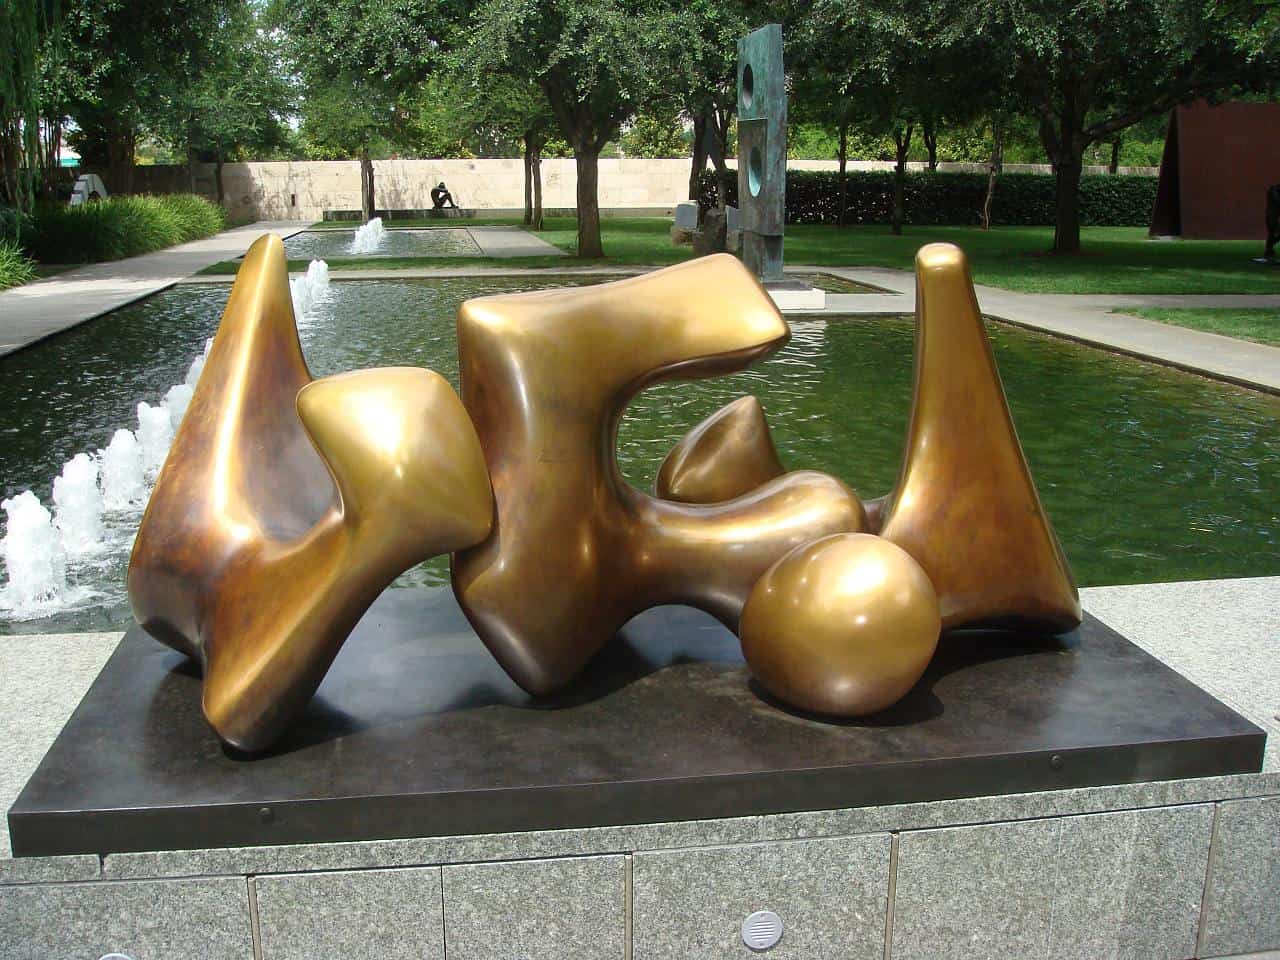 Nasher Sculpture Center